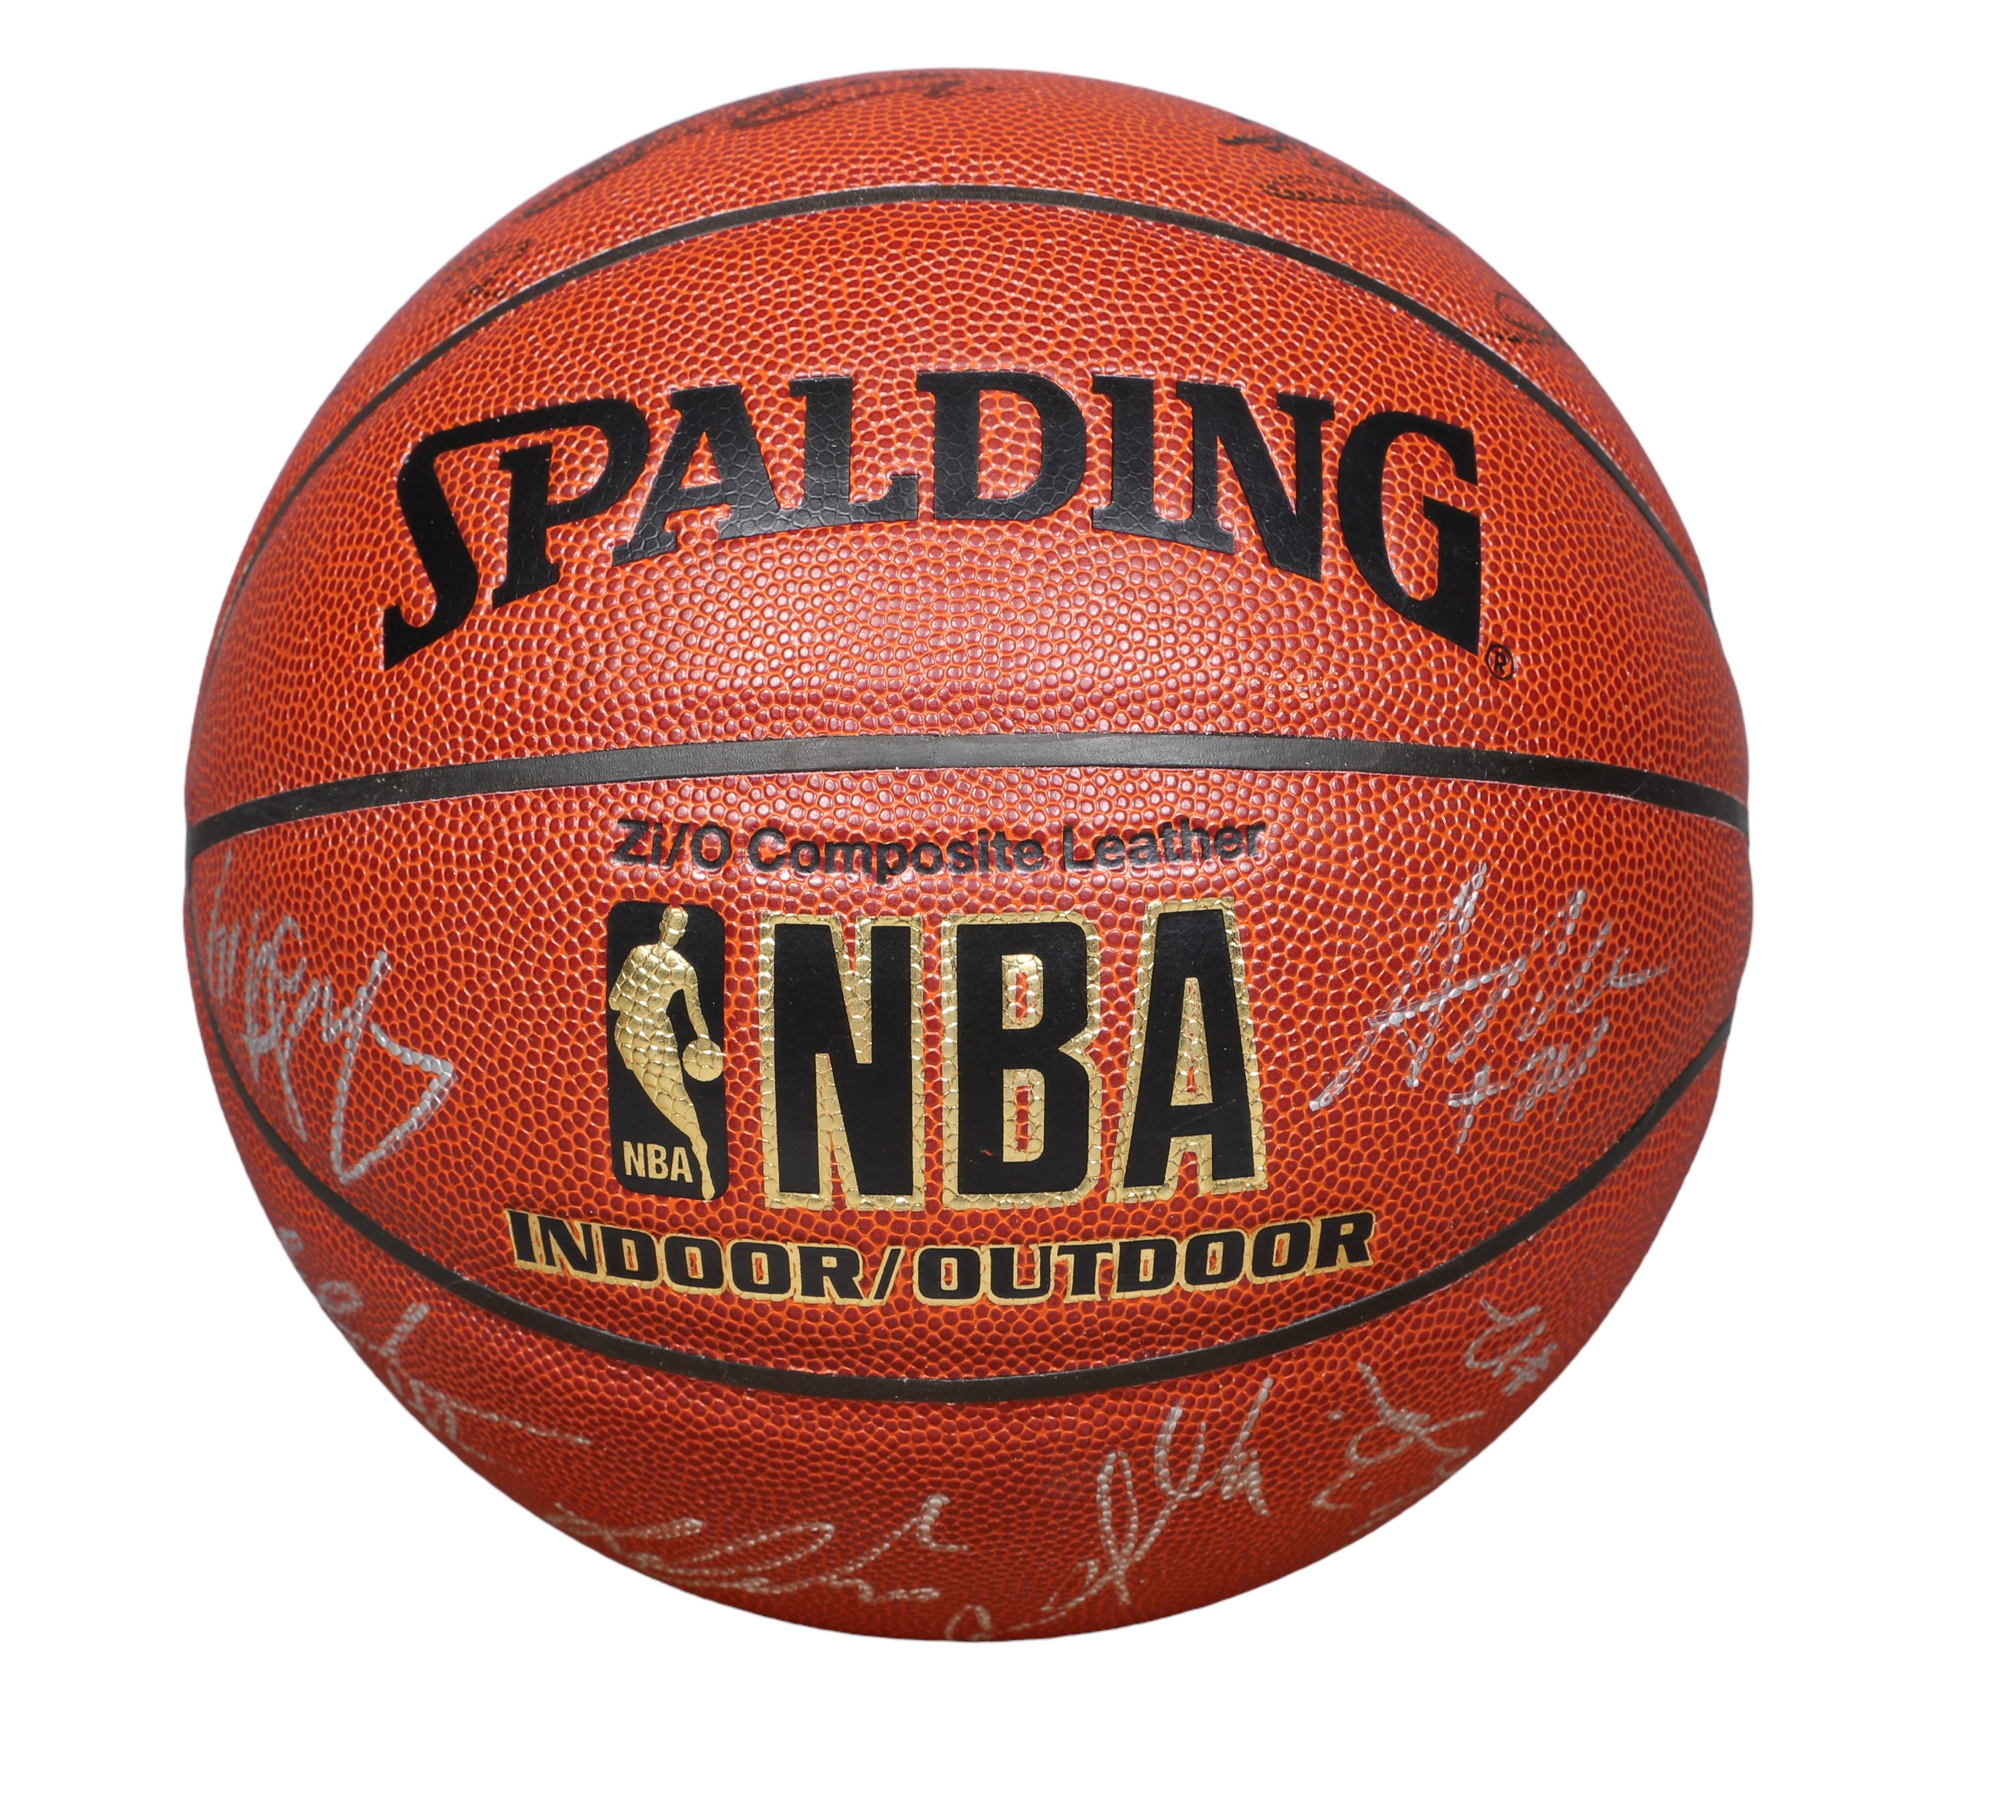 Team signed Spalding NBA basketball  2e1157